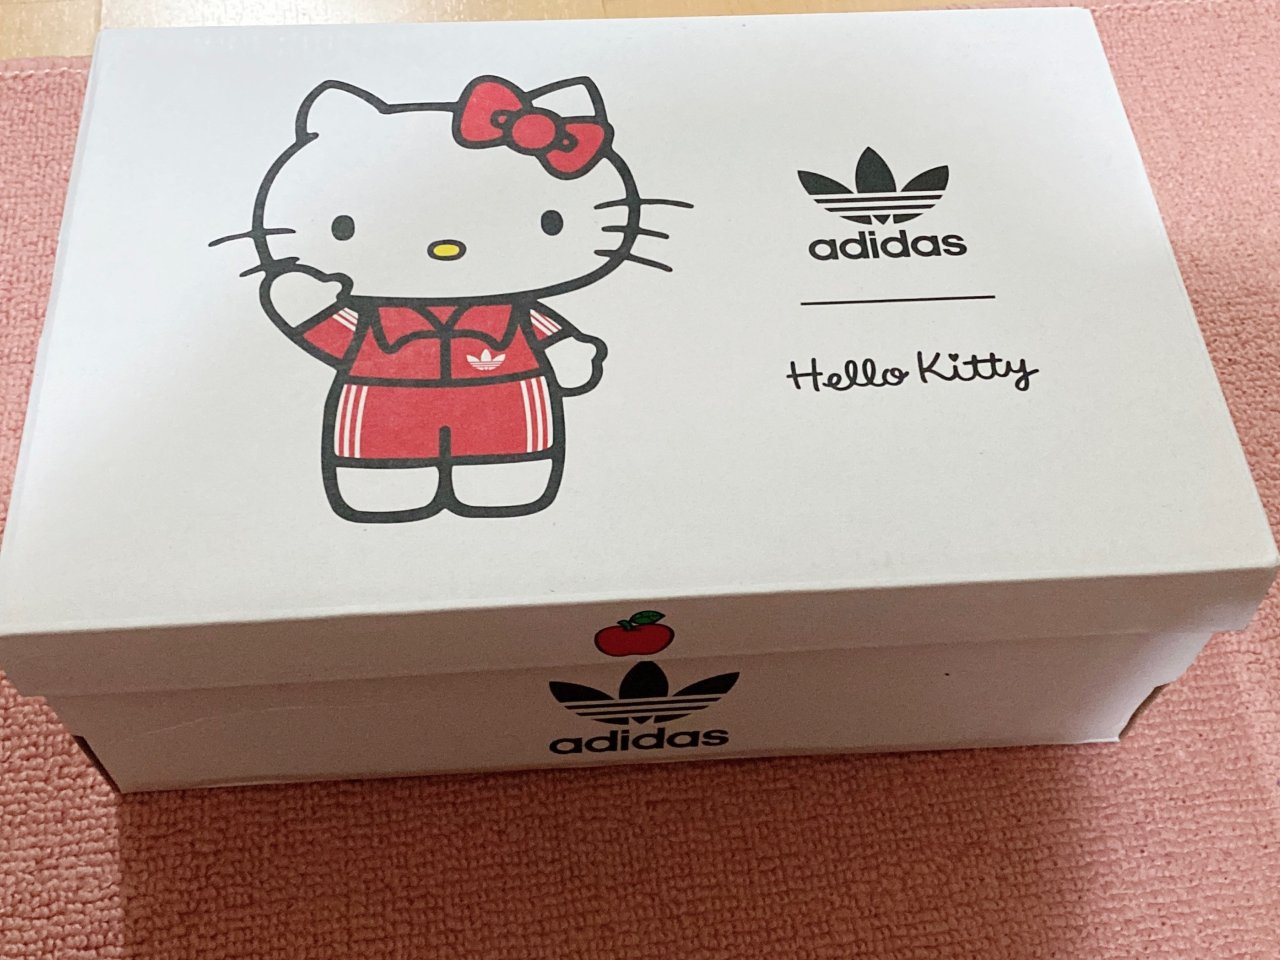 Adidas X Hello Kitty